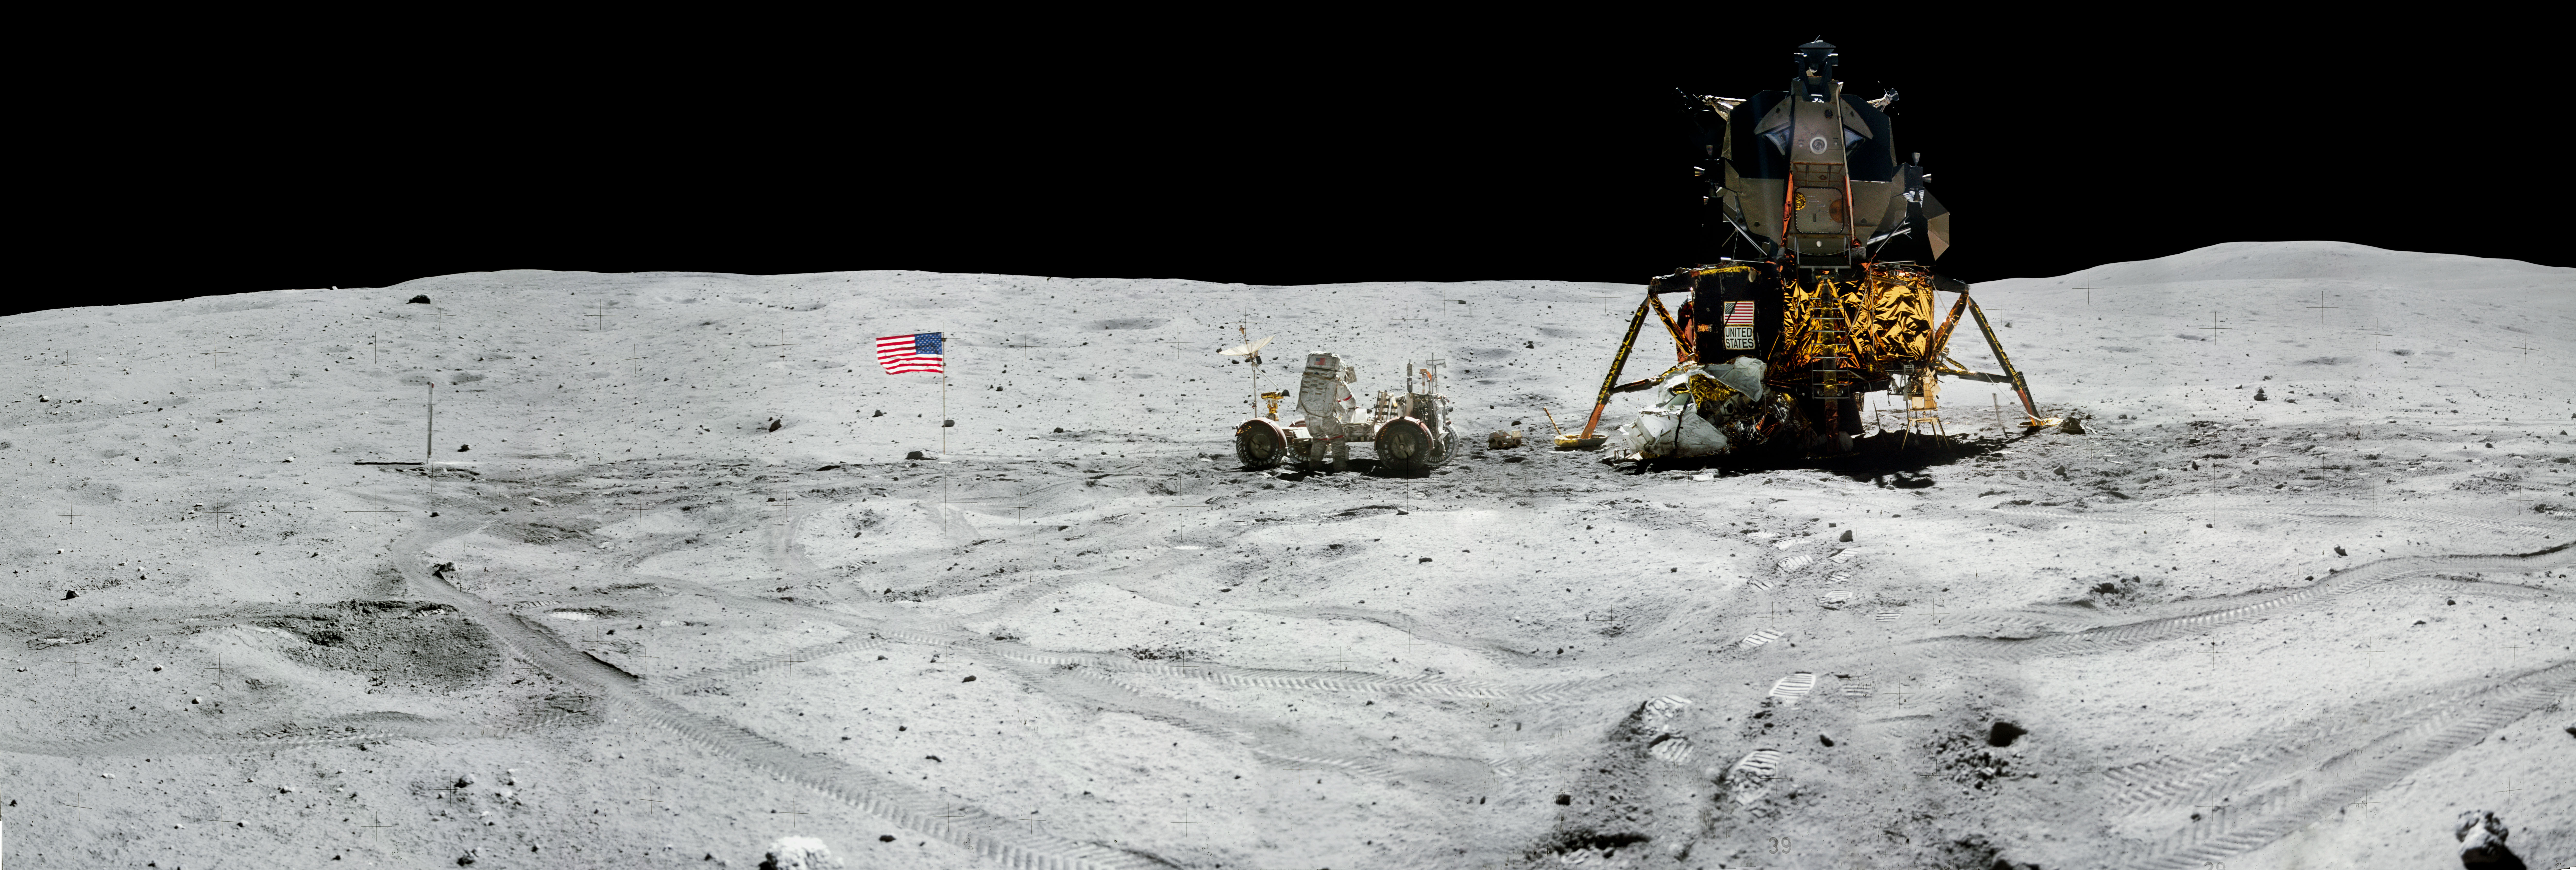 Сколько стоит полет на луну в рублях. Аполлон-11 фото. Аполлон 16 на Луне 1972. Апполо 11 на Луне. Снимки Аполлона 16 на Луне.